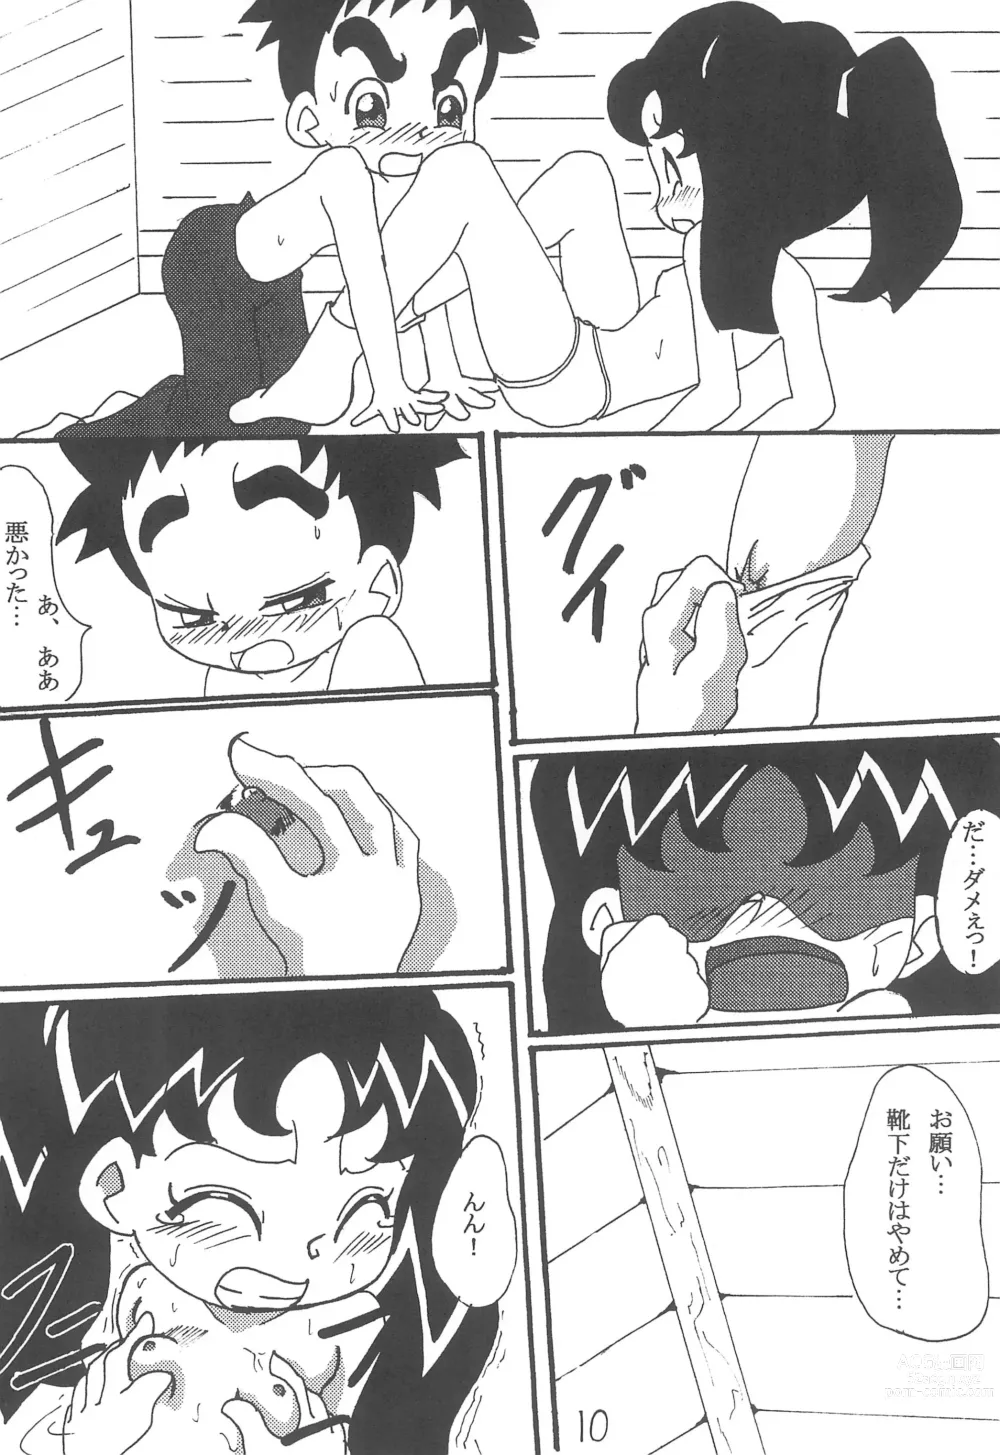 Page 10 of doujinshi Mou Hitotsu no Omoide